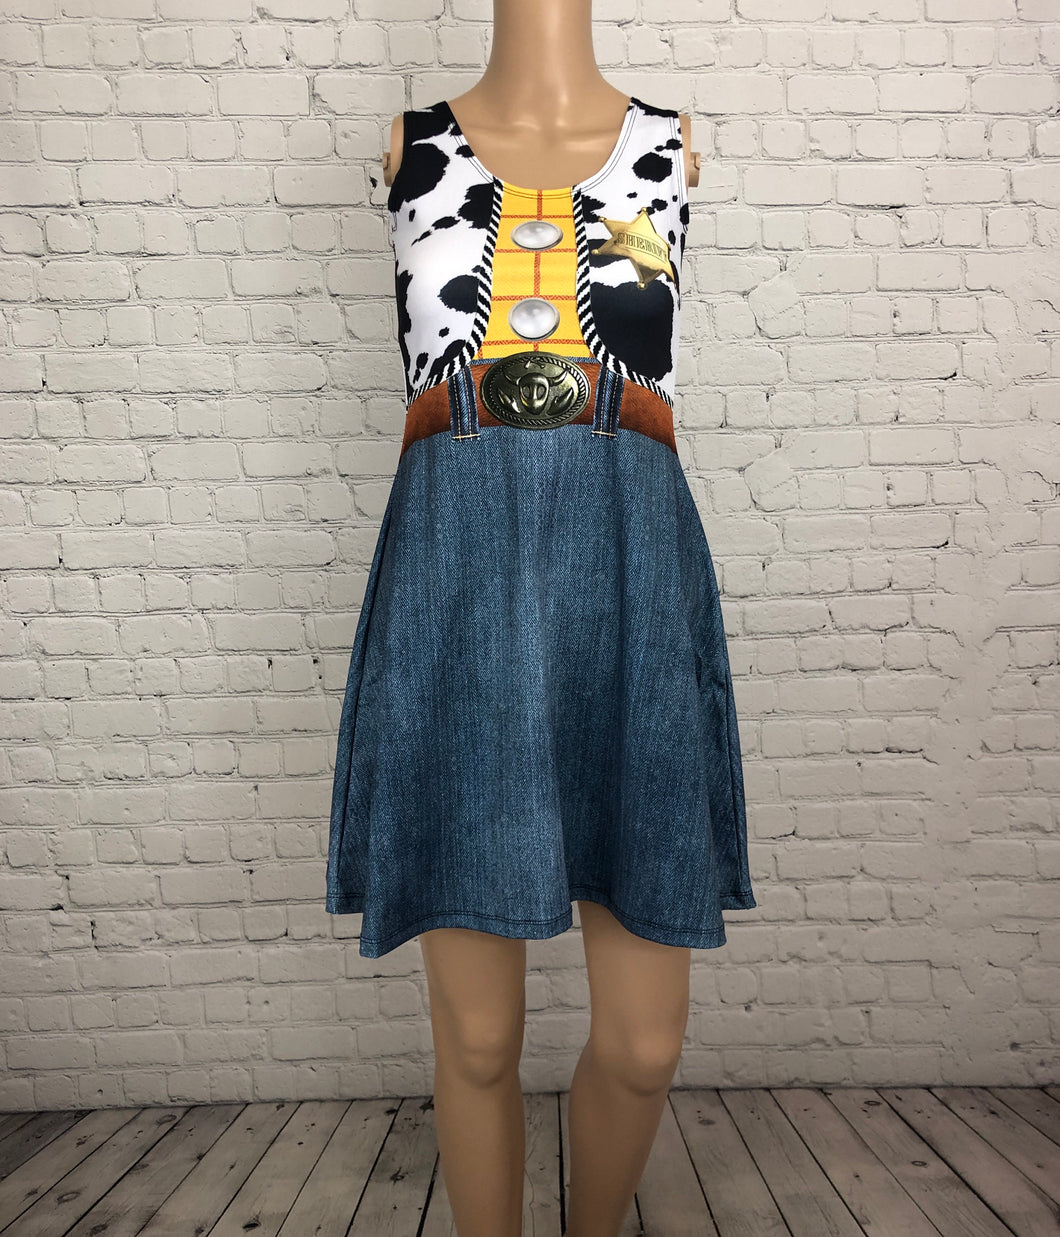 Woody Toy Story Inspired Sleeveless Dress